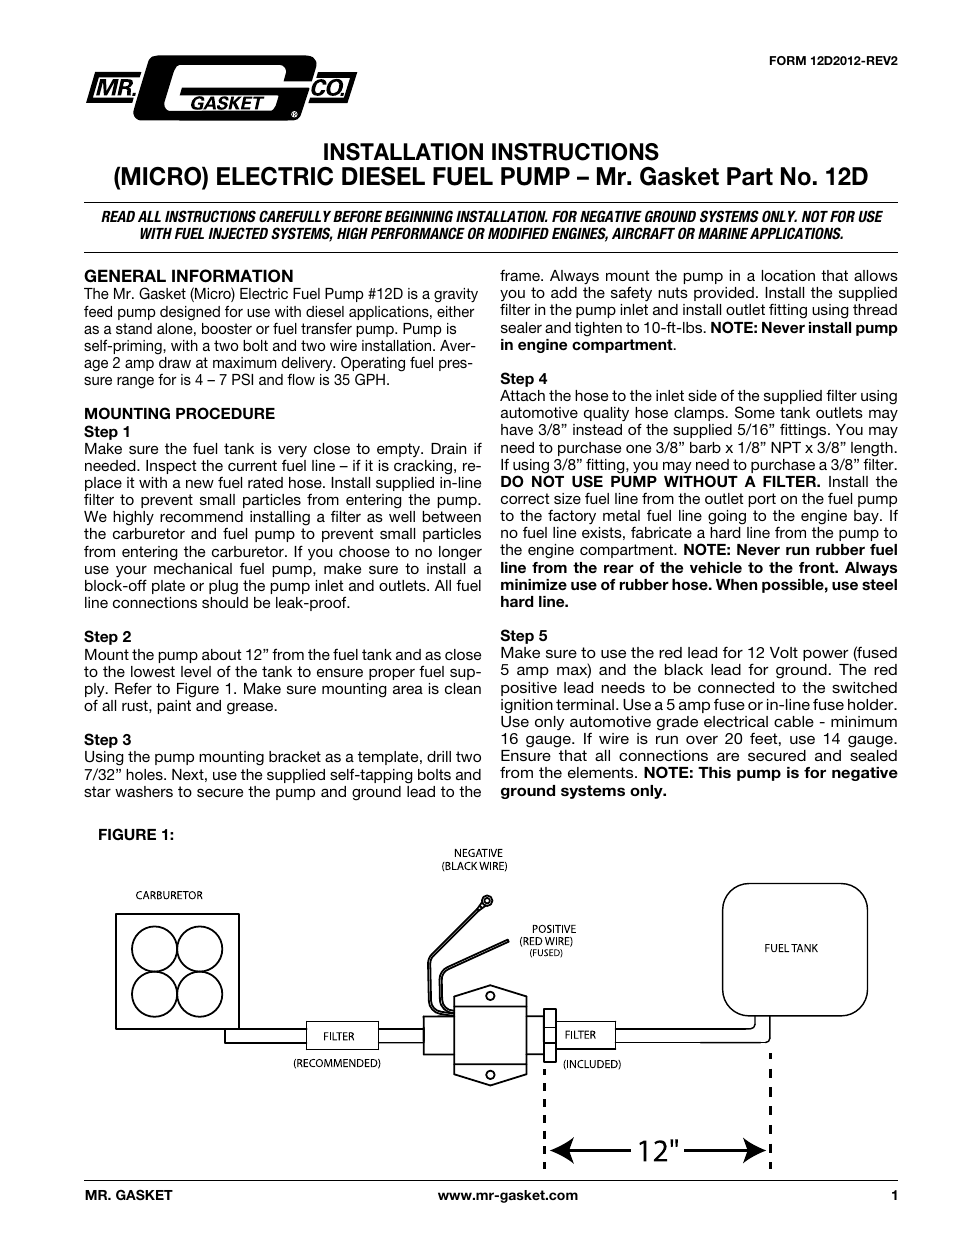 Mr. Gasket 12D Micro Electric Fuel Pump: Diesel User ... text flow fuel filter 